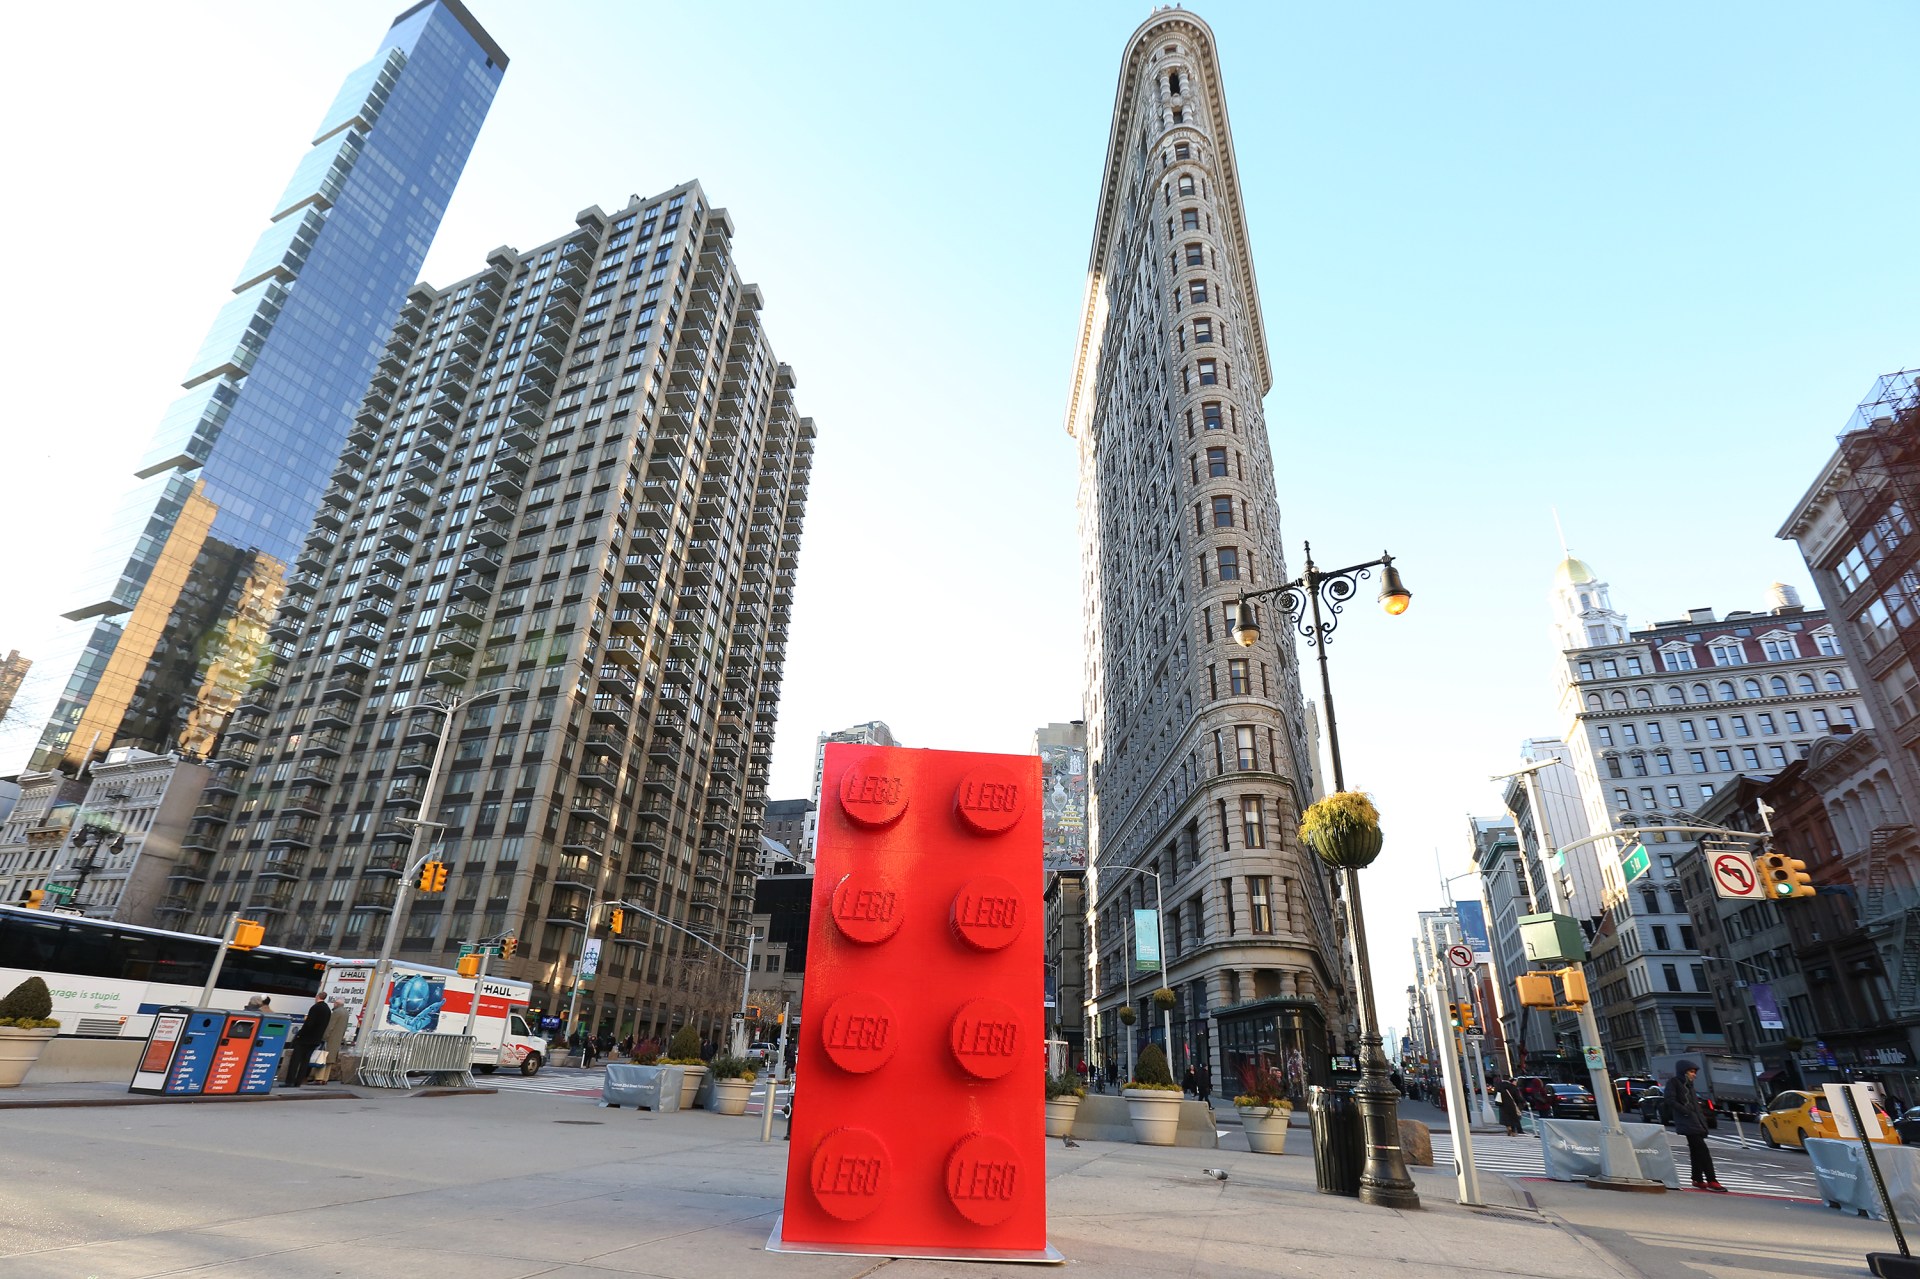 Half-Ton-LEGO-Brick-in-NYC-with-Flatiron-Building